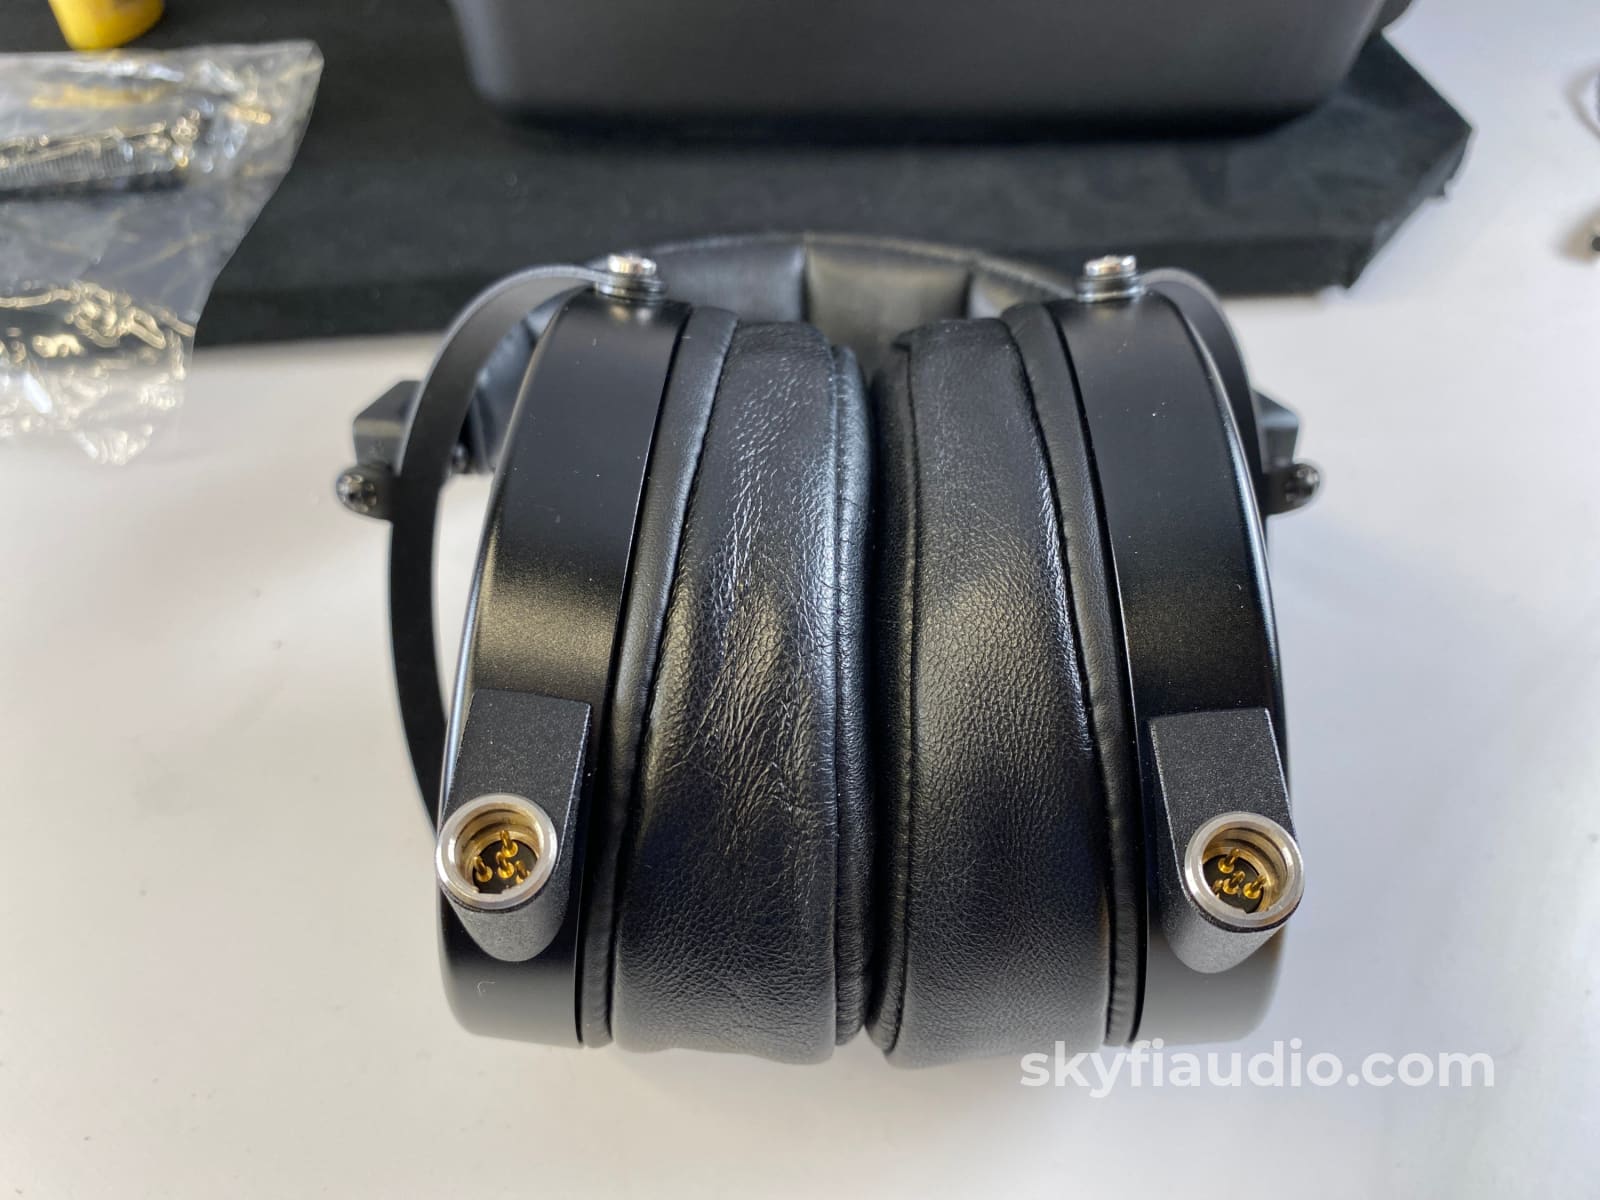 Audeze Lcd-X Planar Magnetic Headphones - With Original Professional Travel Case